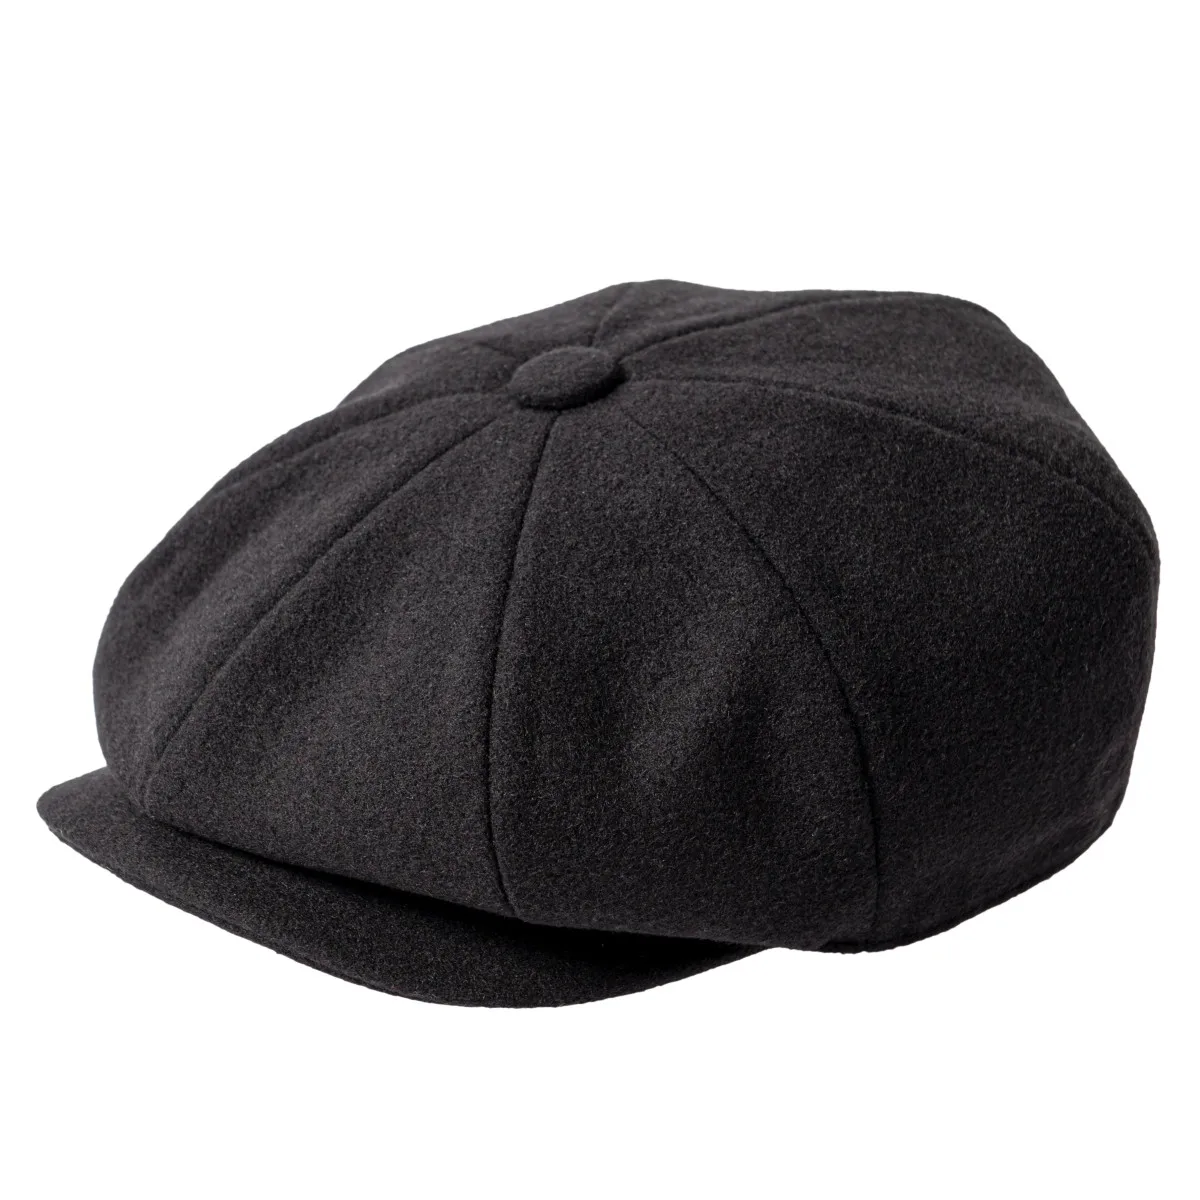 Jangoul Newsboy Caps Men 8 Panel Flat Cap Wool Blend Driving Hat Beret Male Herringbone Baker Boy Ivy Hats